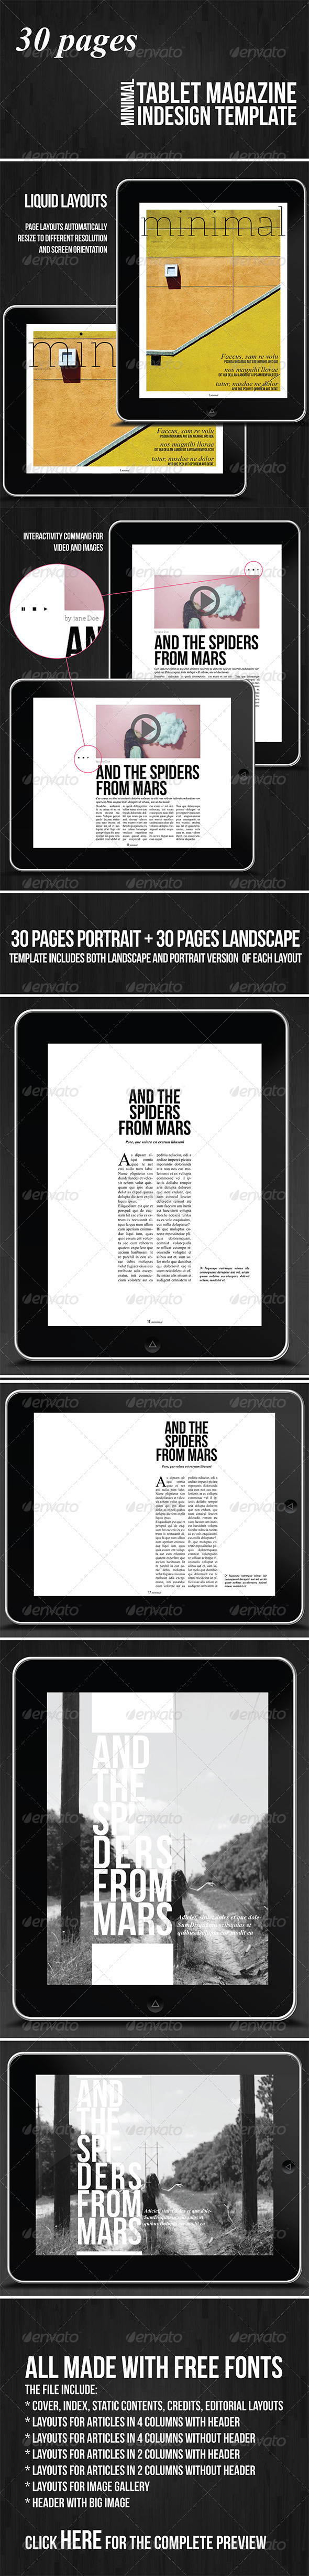 tablet magazine